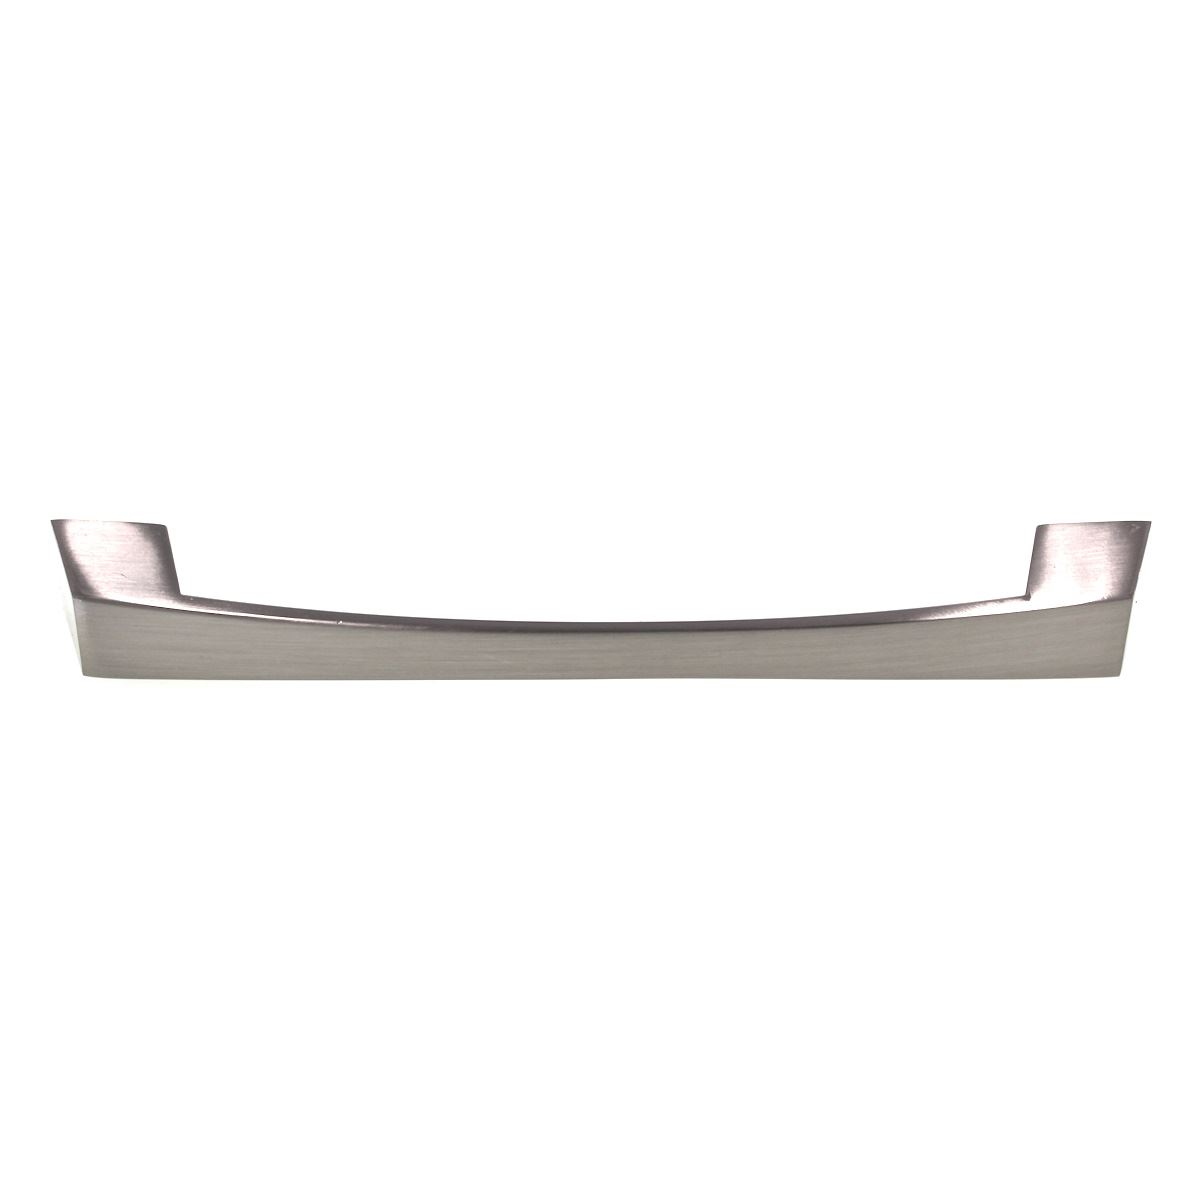 Emtek Sweep 6" Ctr Cabinet Bar Pull Satin Nickel Solid Brass 86408US15